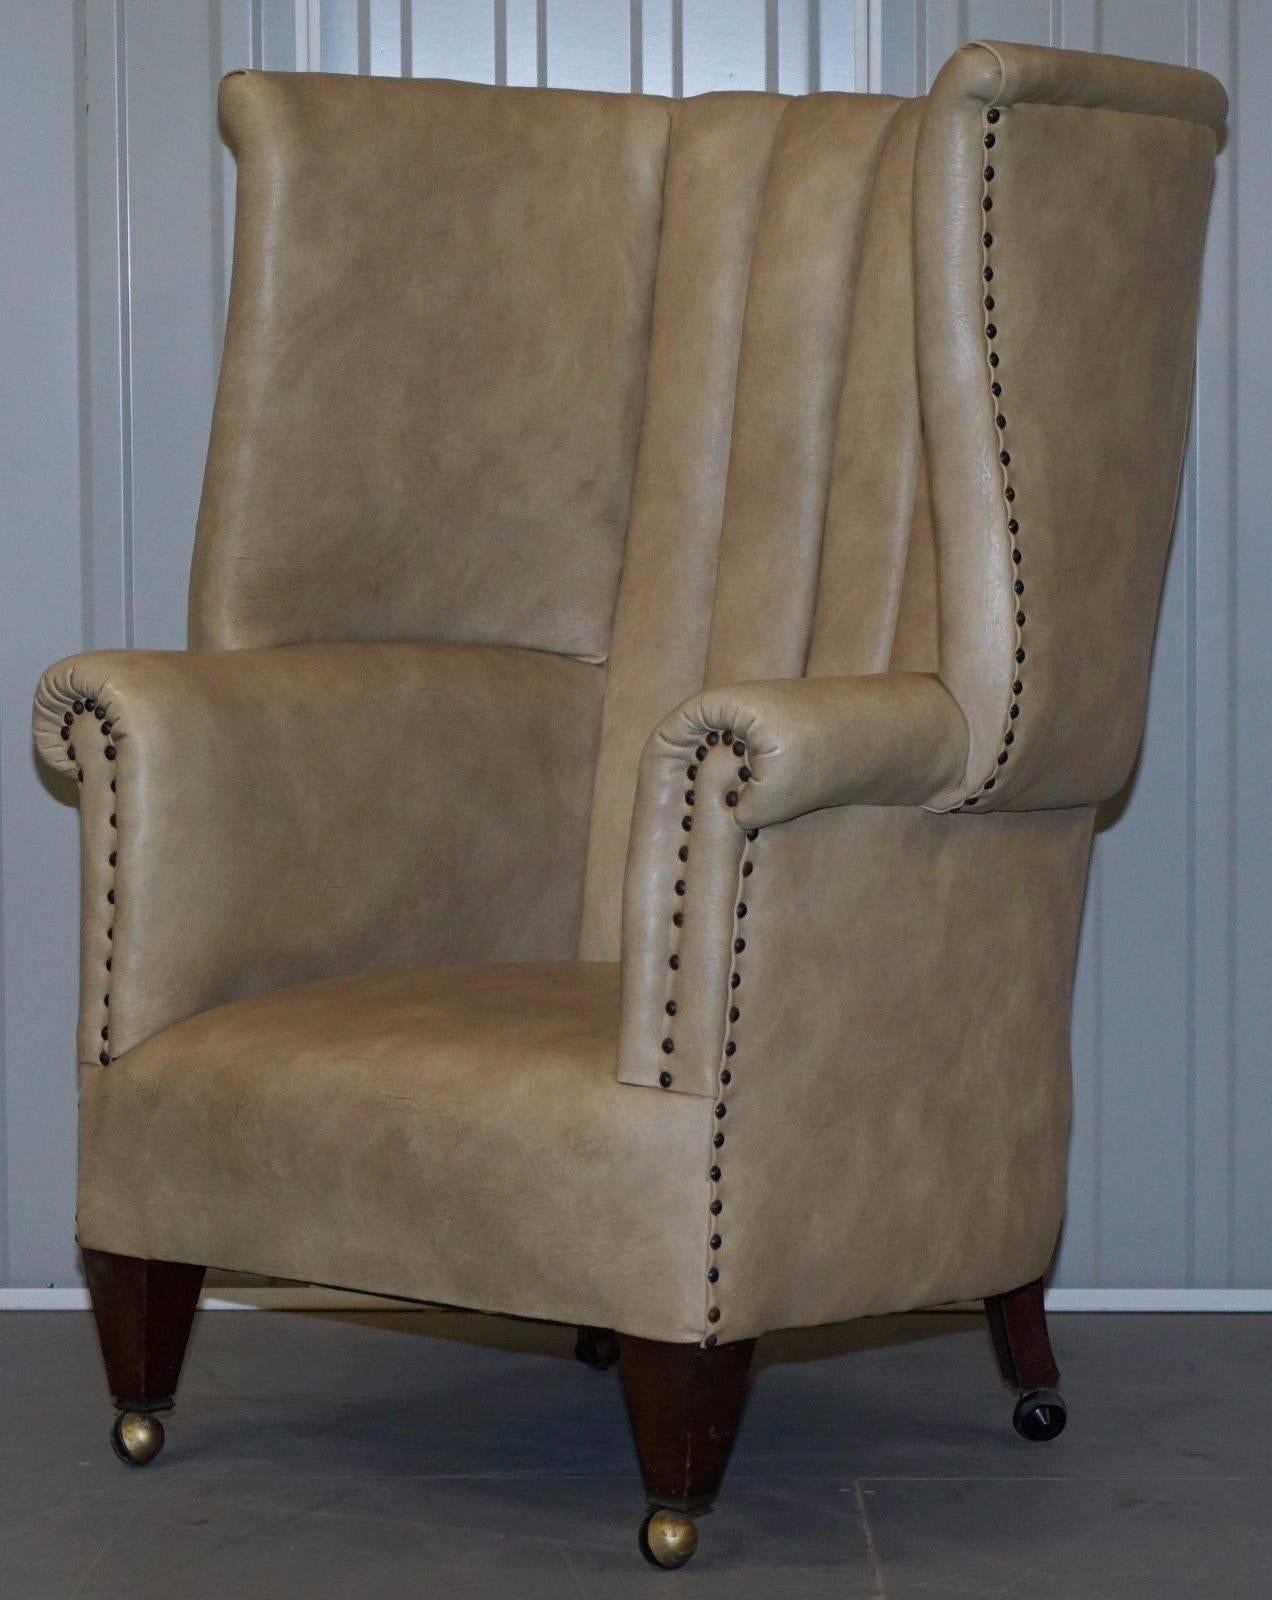 British Rare circa 1830 Chesterfield Porters Chair Mahogany Framed Wingback Rare Find